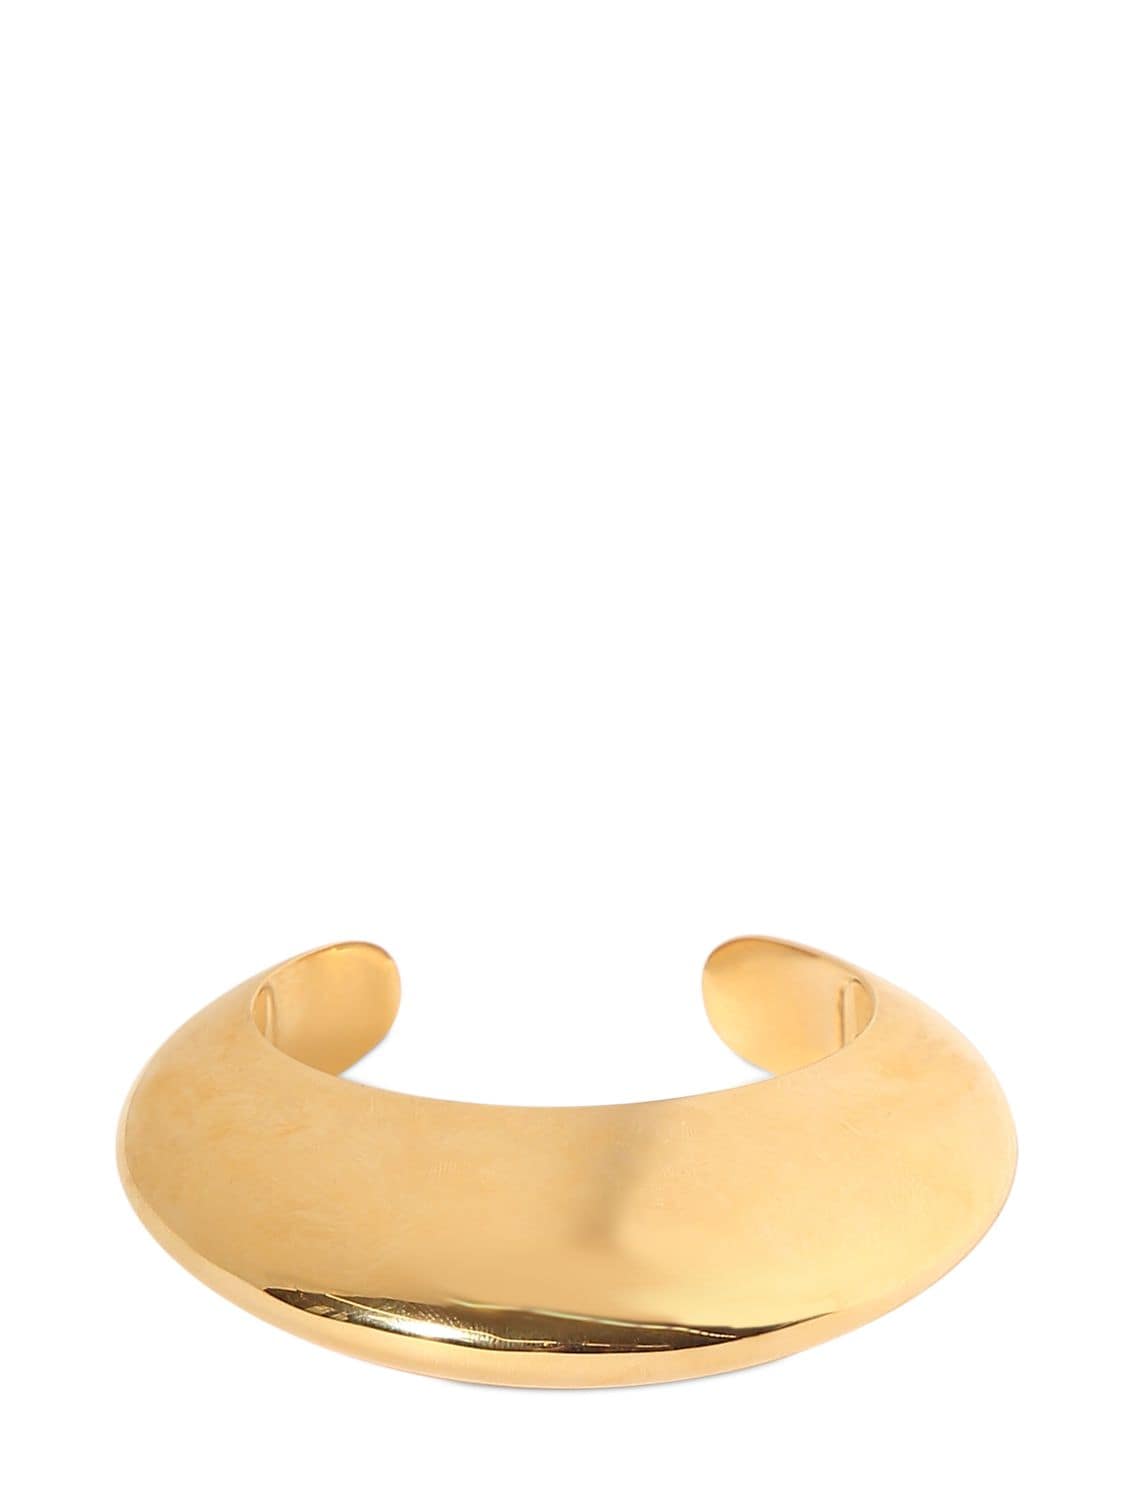 Saint Laurent Thick Bumpy Brass Cuff Bracelet In Gold